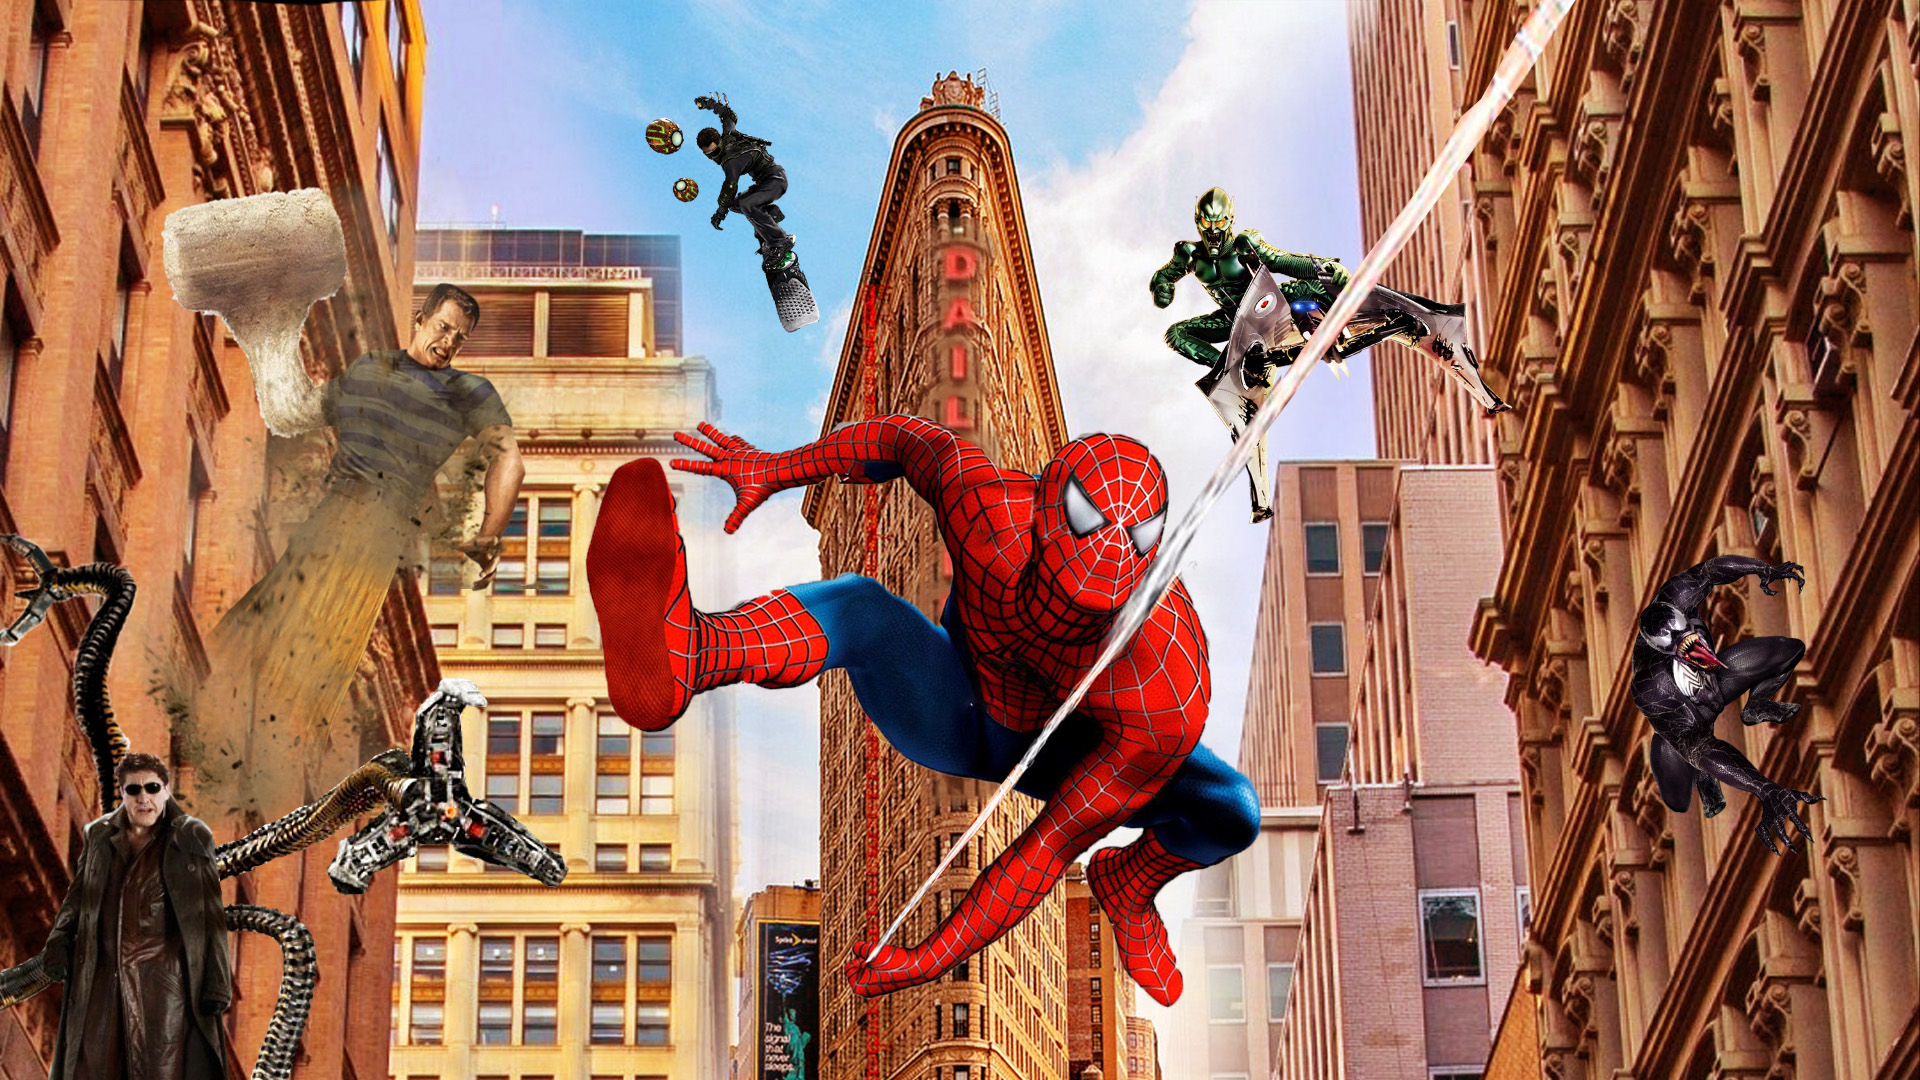 Sam Raimi's Spider-man Wallpaper by Thekingblader995 on DeviantArt